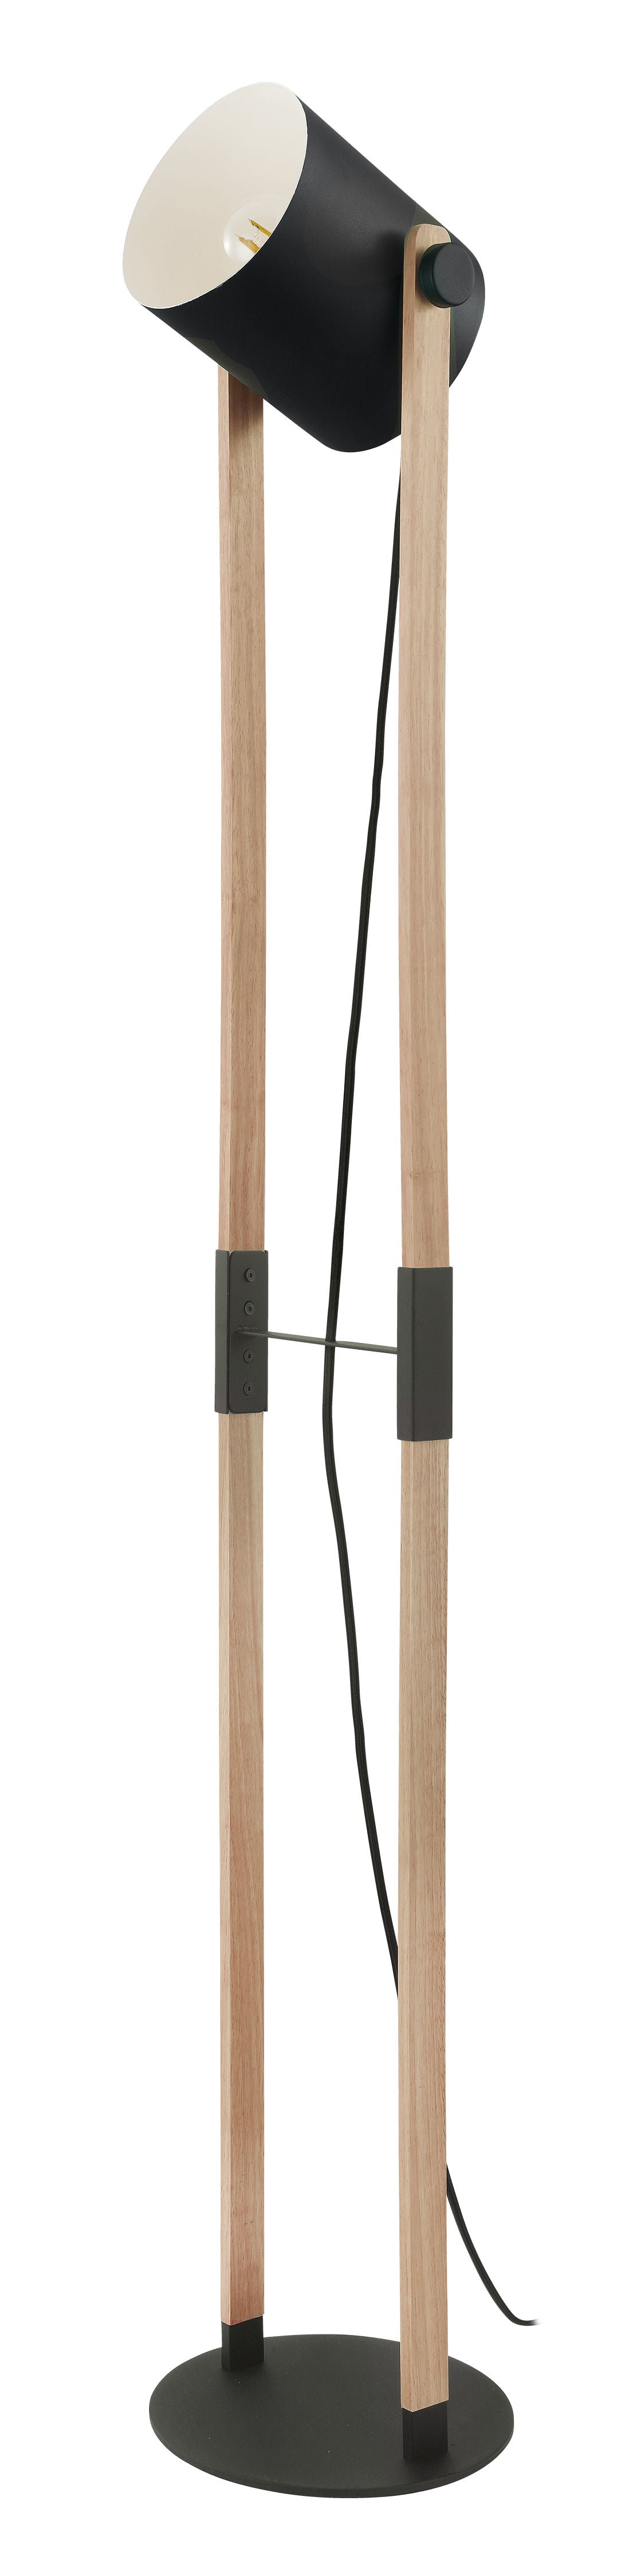 Hornwood Floor lamp Wood, Black - 43048A | EGLO